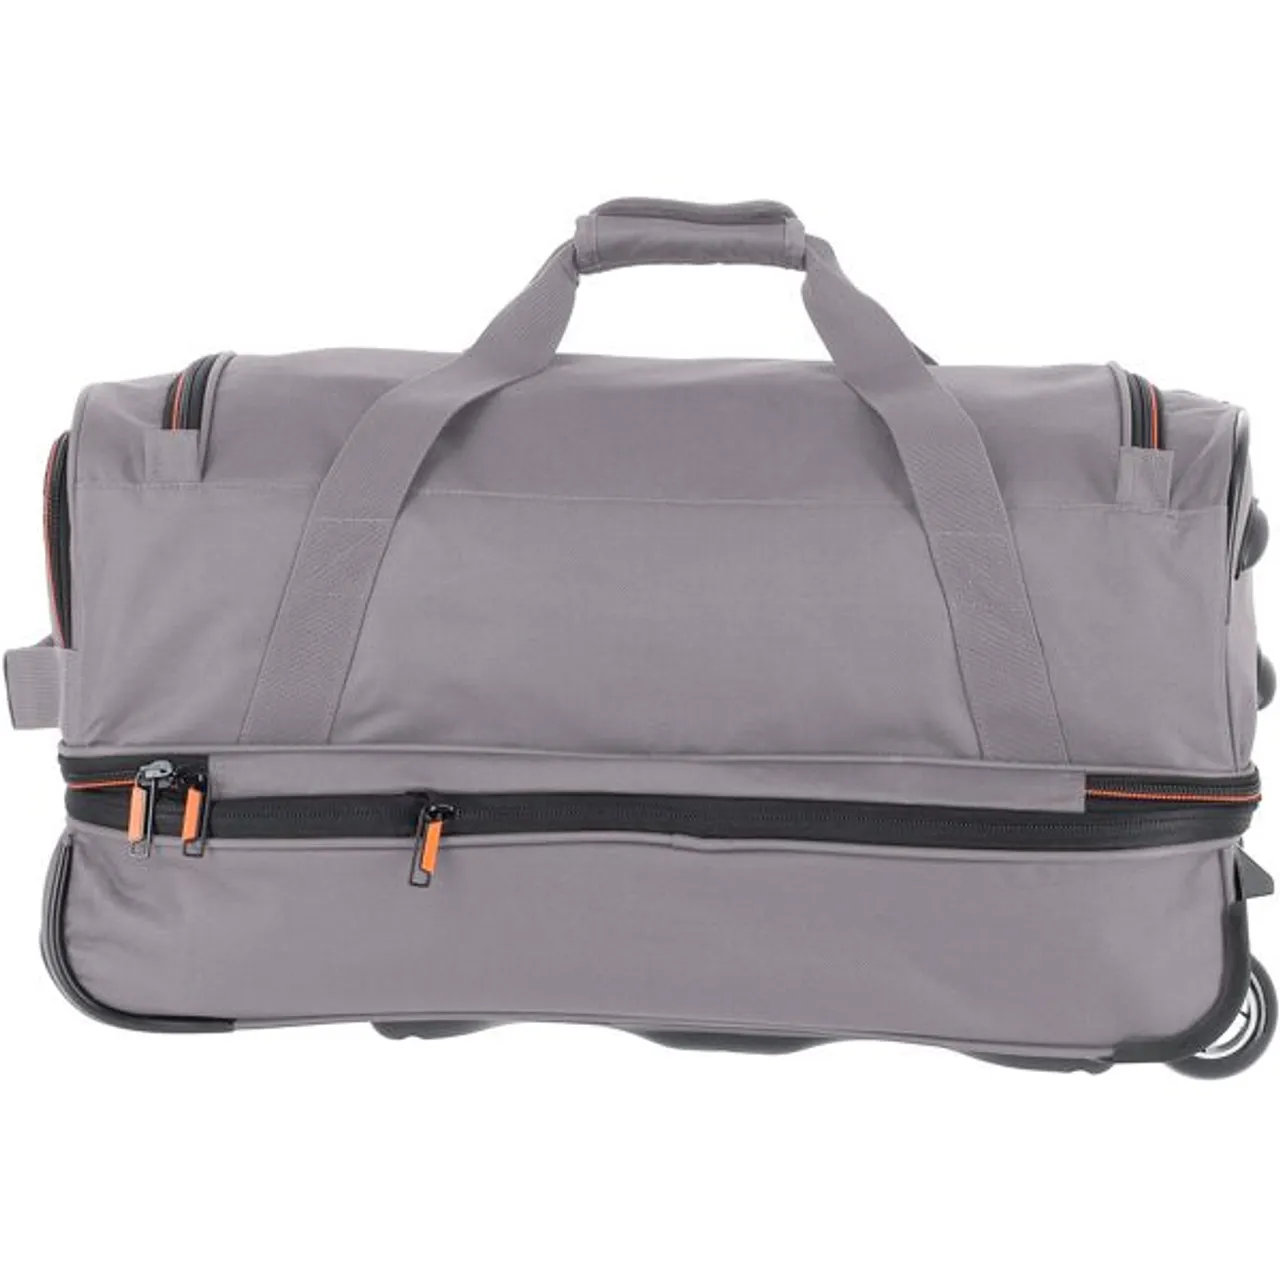 Reisetasche TRAVELITE "Basics, 55 cm, grau/orange" Gr. B/H/T: 55 cm x 32 cm x 29 cm, grau (grau, orange) Taschen Handgepäck